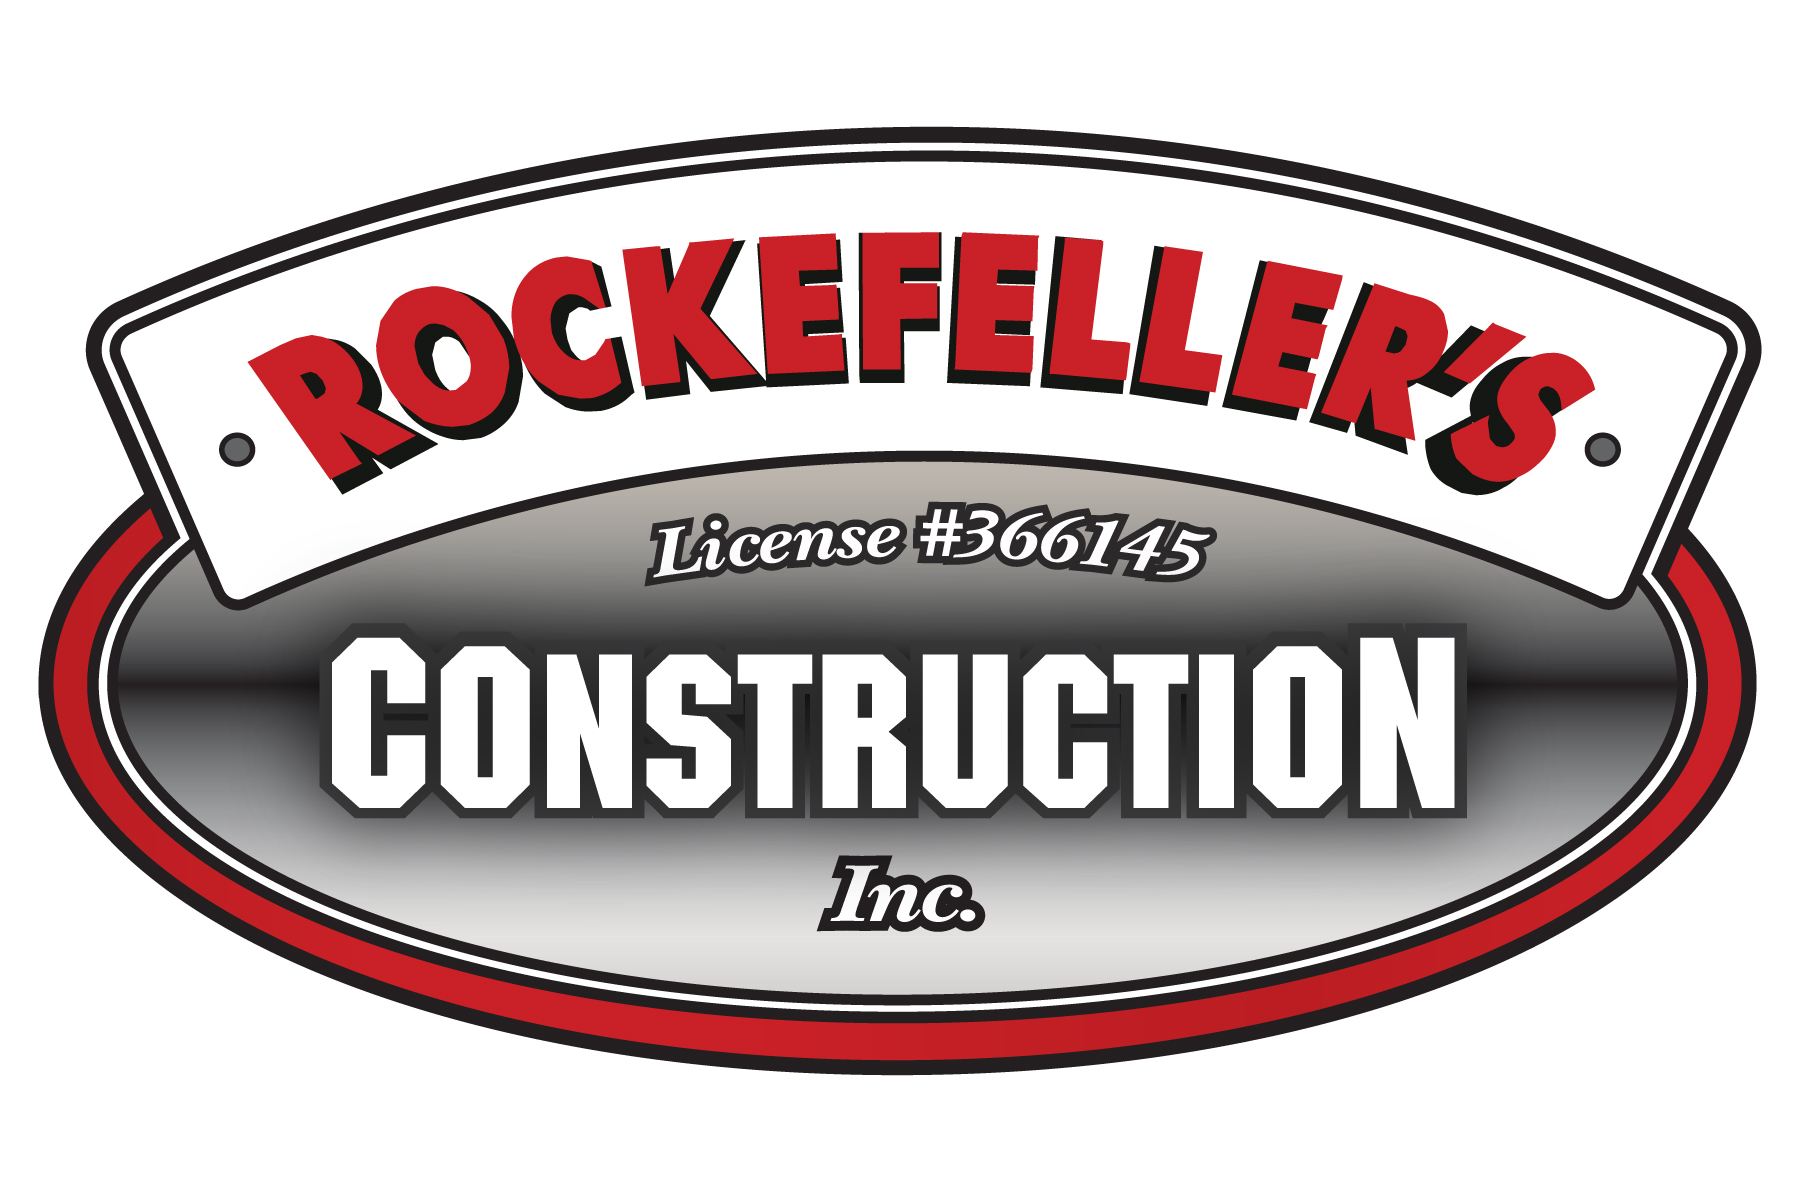 Rockefeller's Construction logo